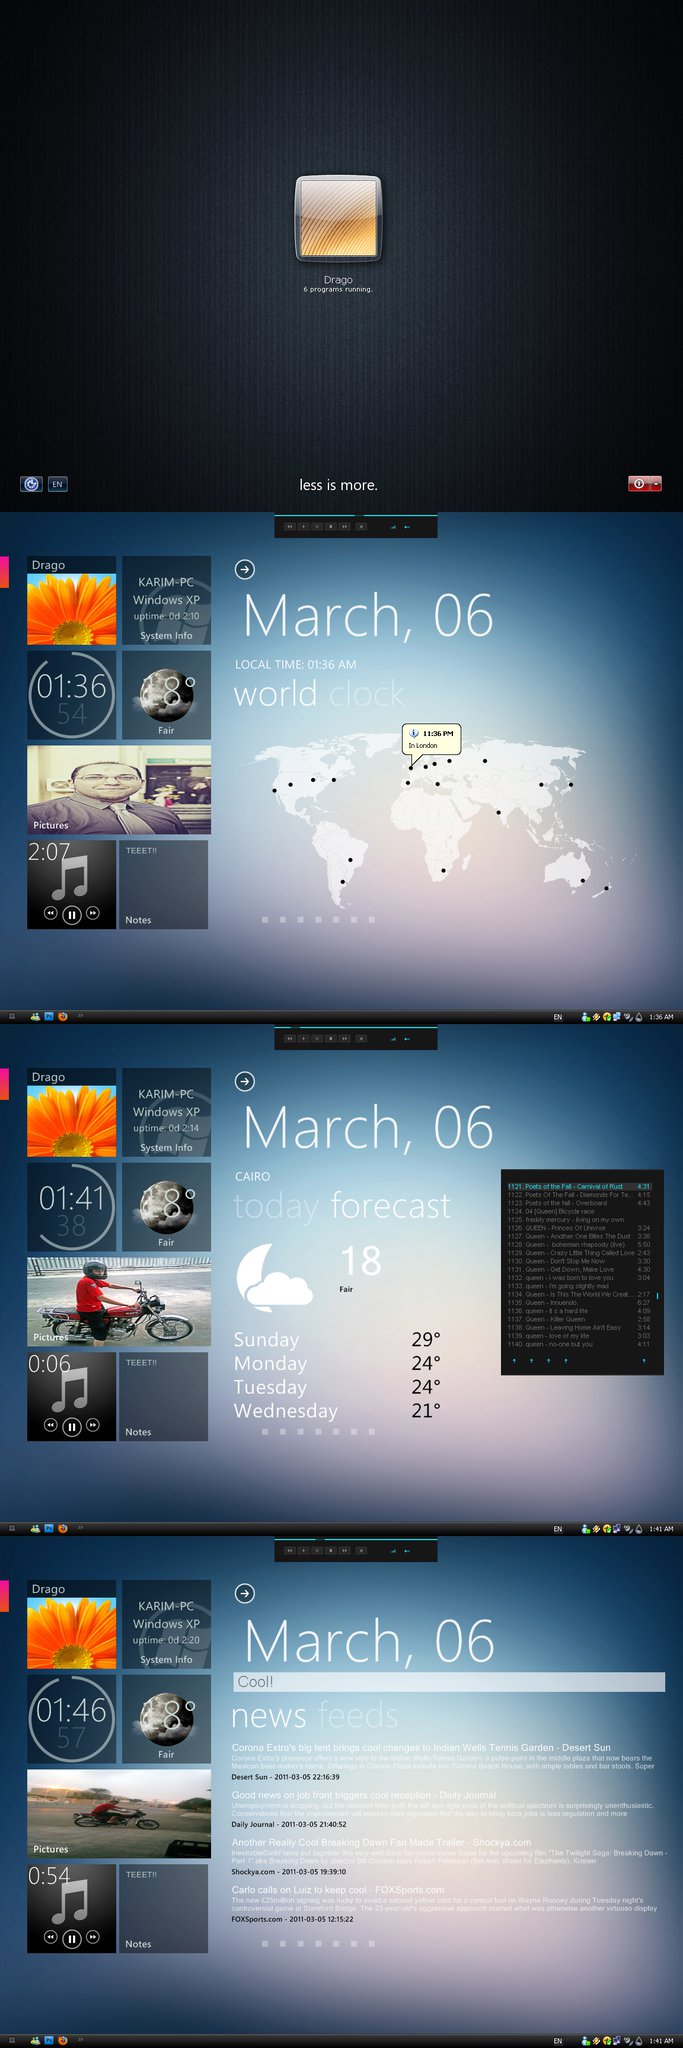 feb 2011 desktop